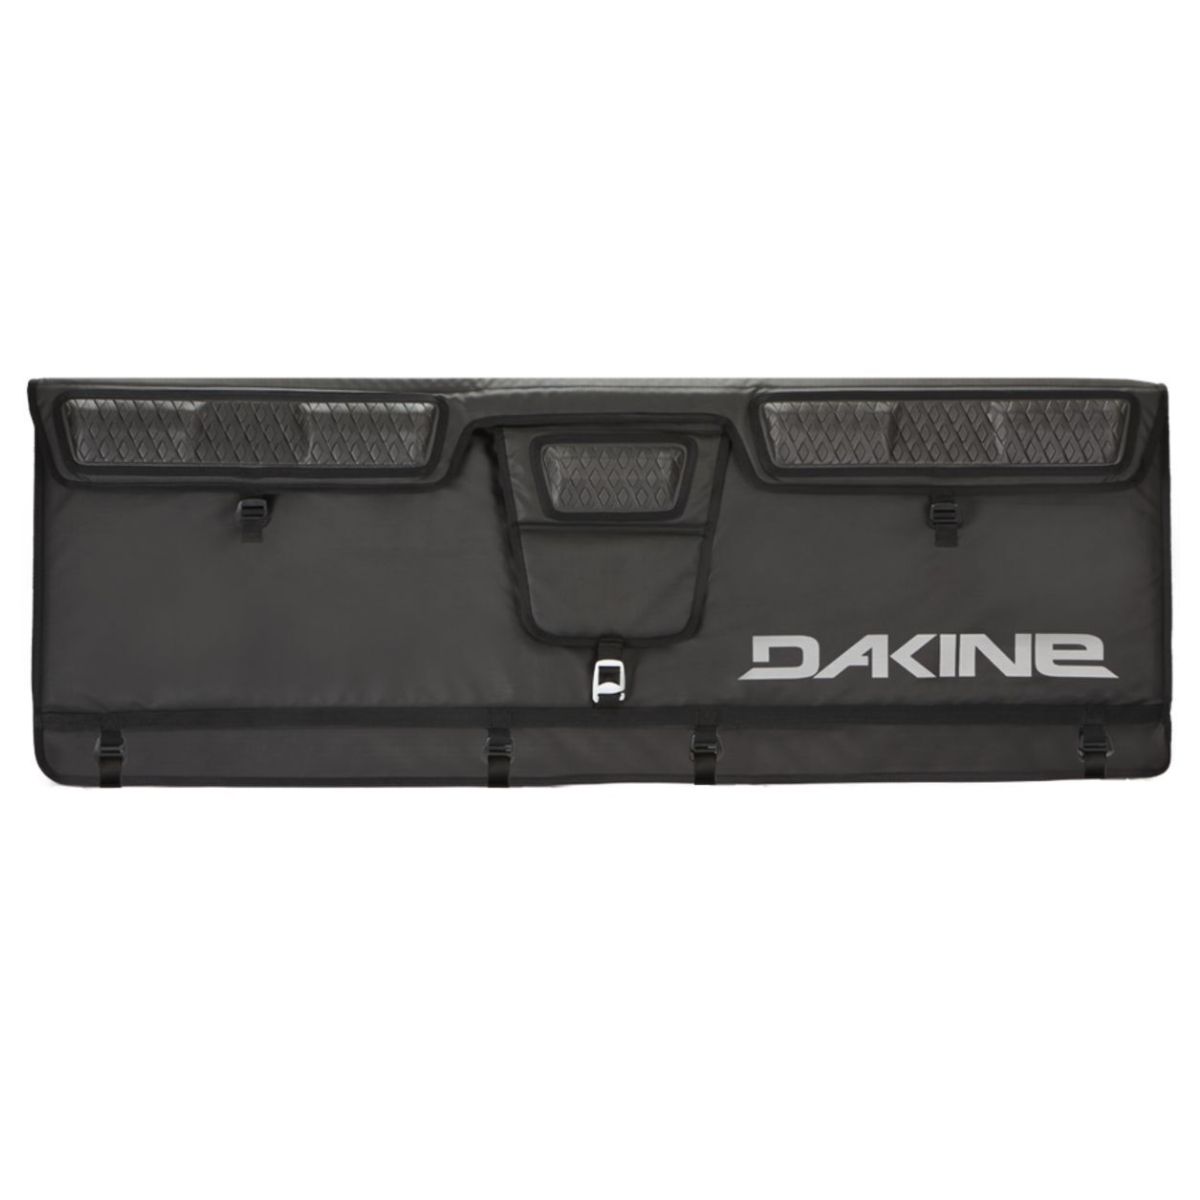 Protector for Truck Box Dakine Universal Pickup Pad Small Black